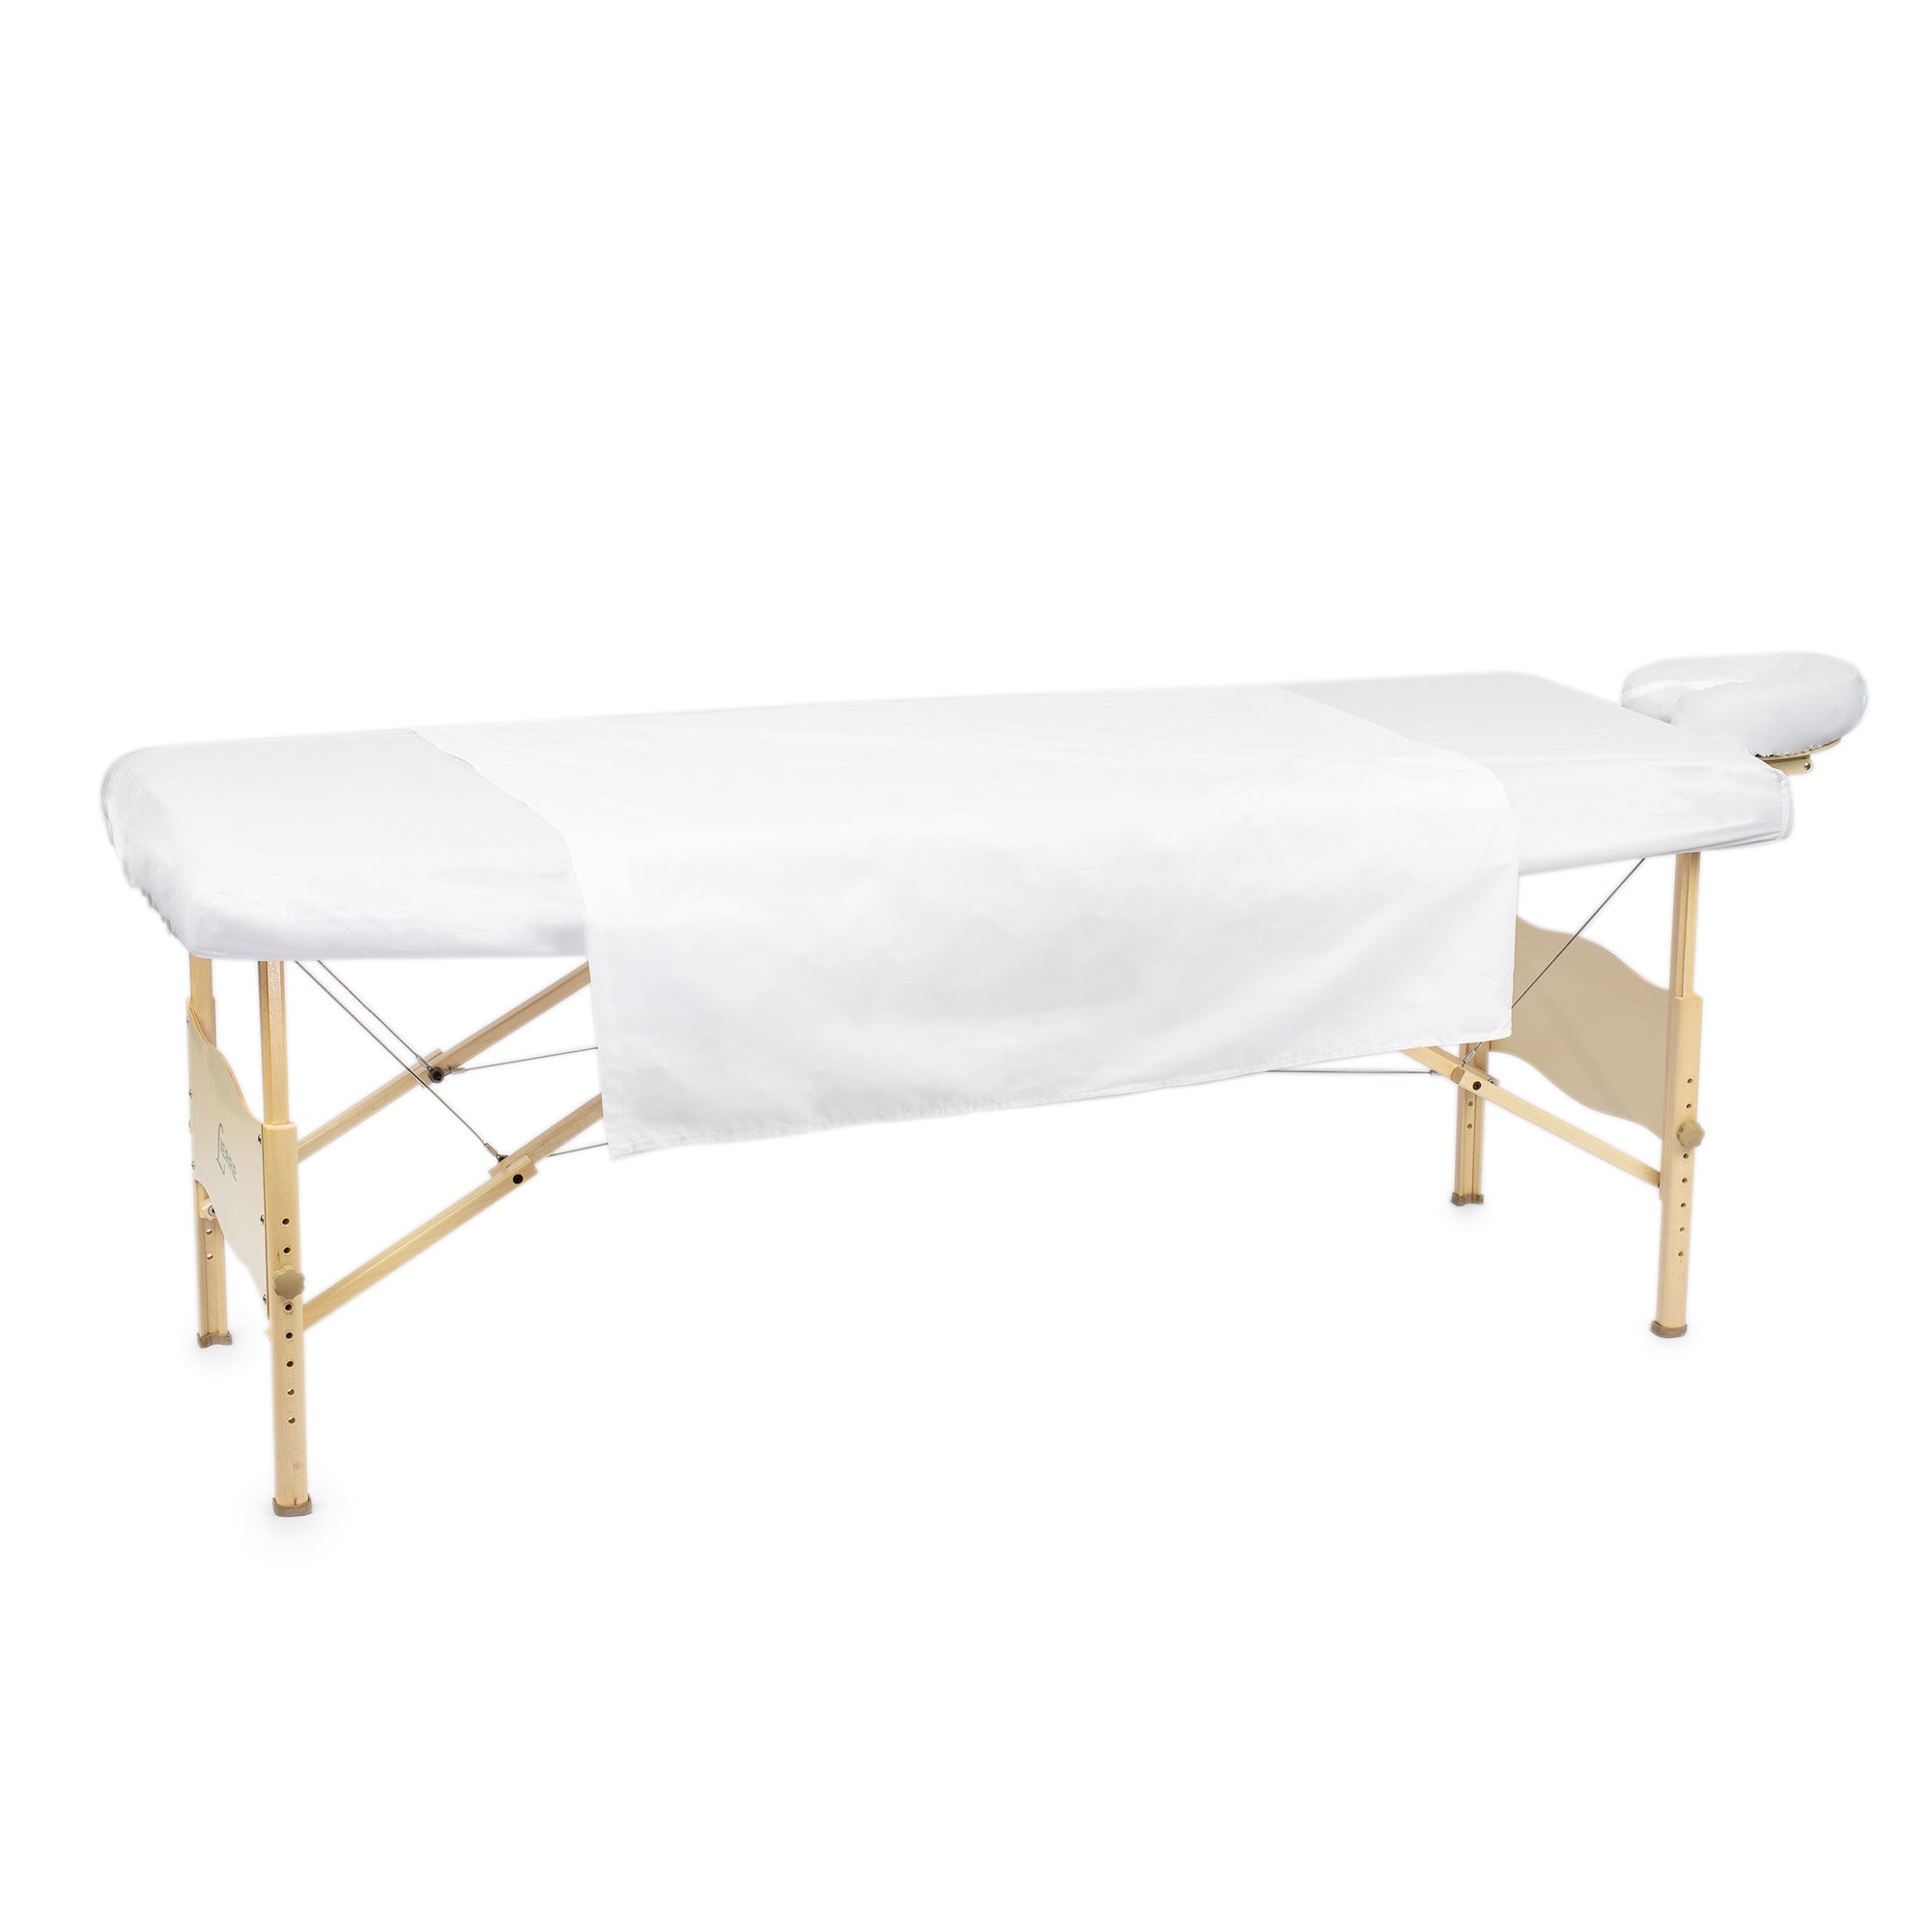 Percale massage table sheet set 3pcs